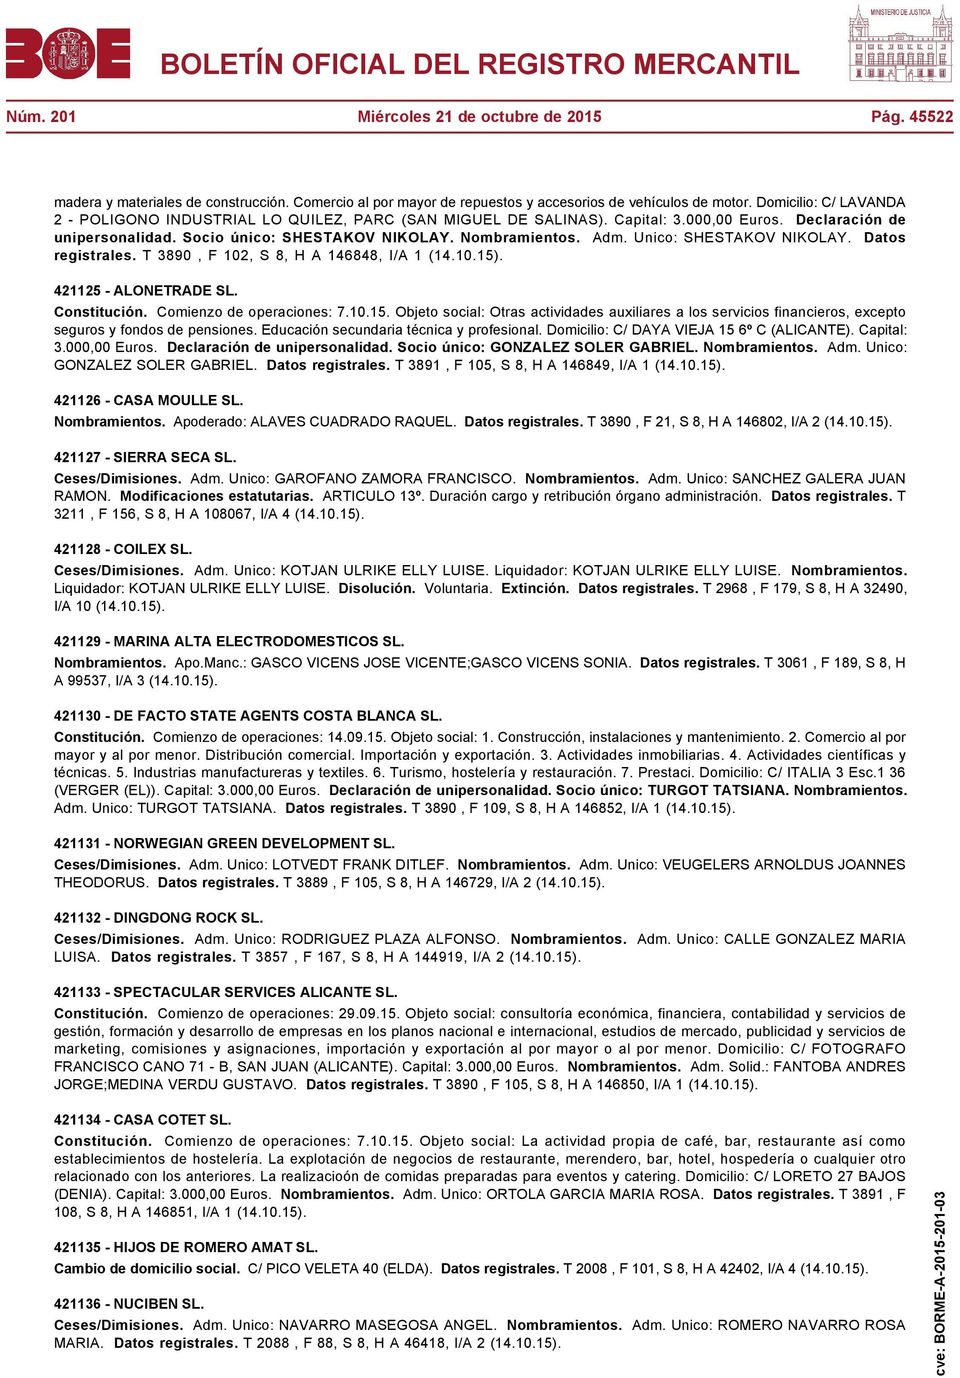 Unico: SHESTAKOV NIKOLAY. Datos registrales. T 3890, F 102, S 8, H A 146848, I/A 1 (14.10.15)